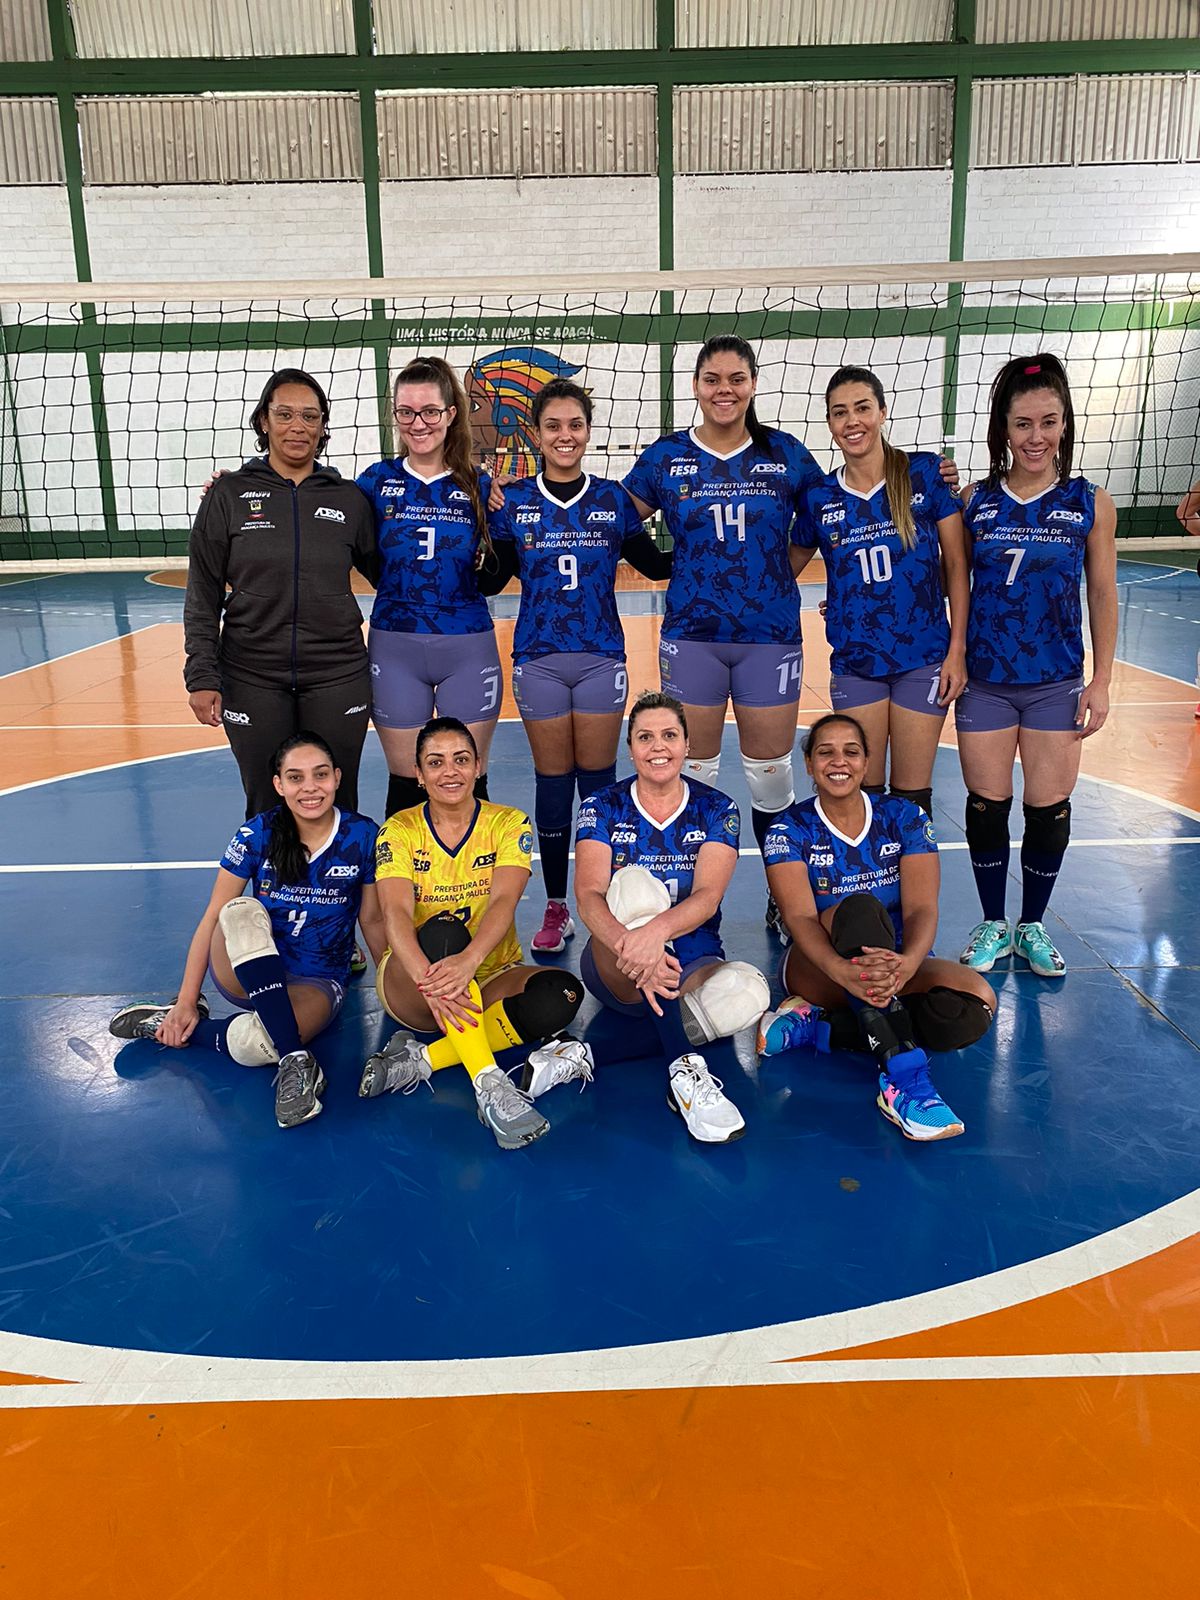 Equipe de vôlei feminino de Bragança Paulista participa da XXII Copa  Itatiba Regional de Voleibol - Prefeitura de Bragança Paulista